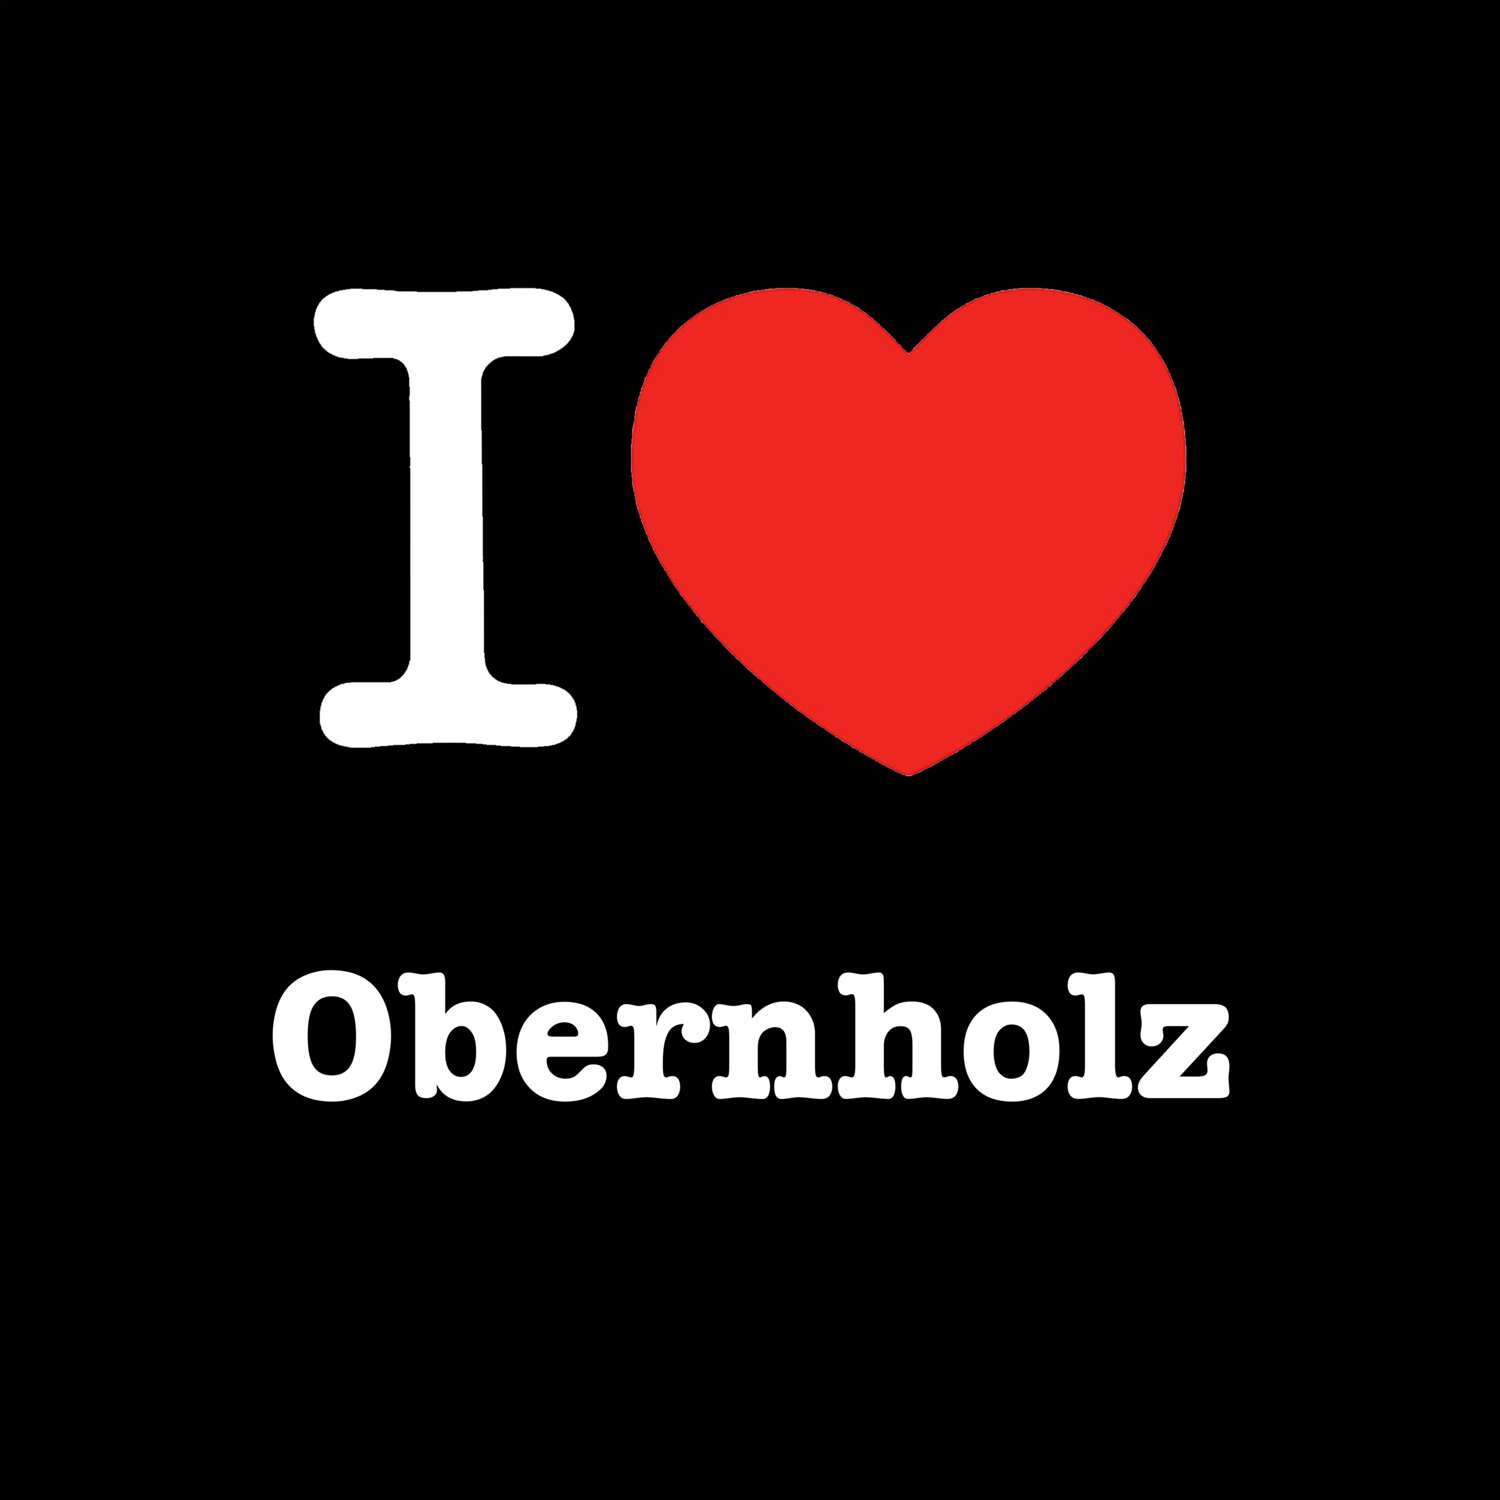 Obernholz T-Shirt »I love«